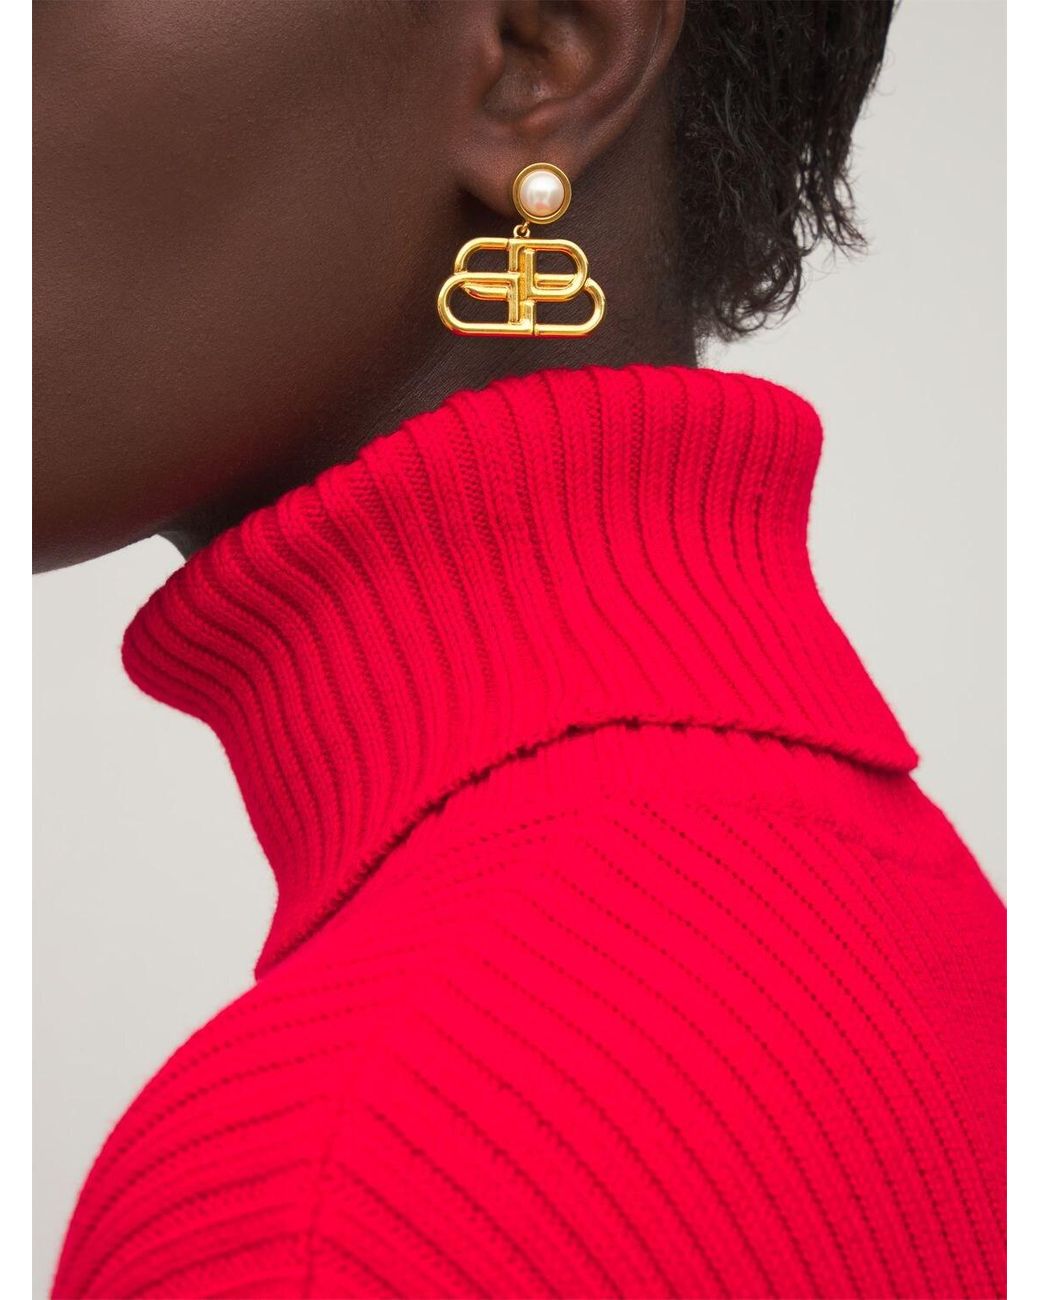 Balenciaga Bb Drop Earrings in Gold/White (Metallic) | Lyst